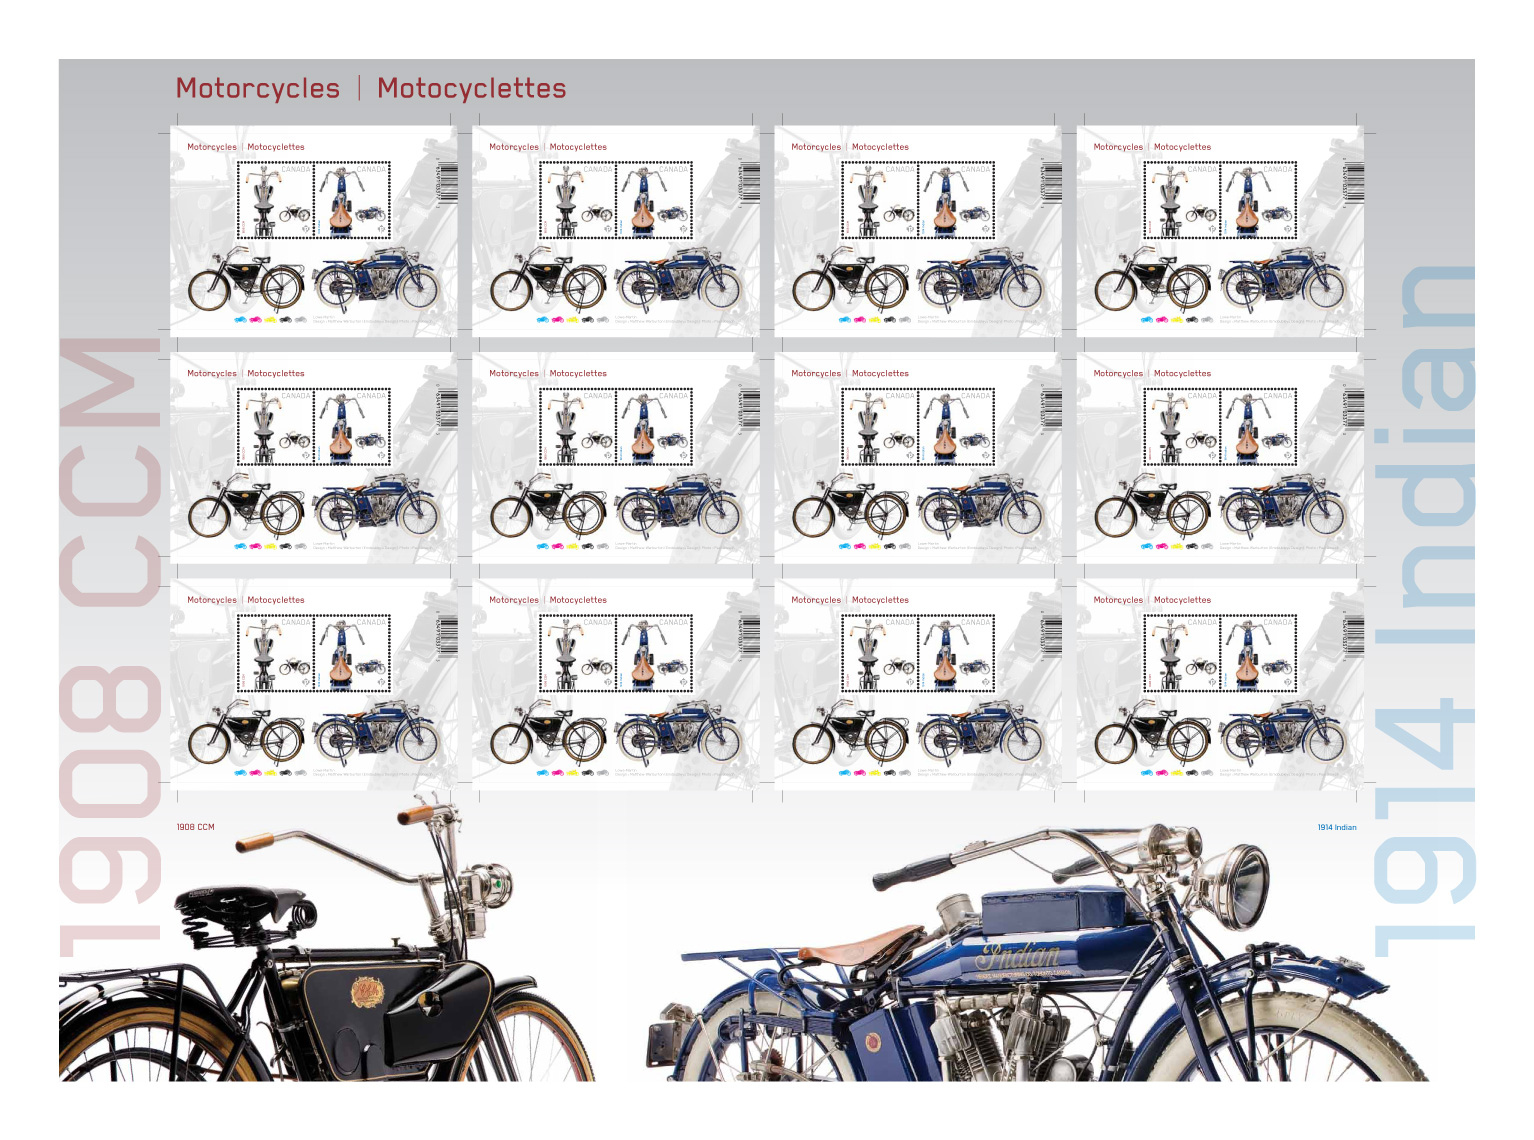 Motorcycles-2013-Uncut-Horiz-2-DUP.jpg